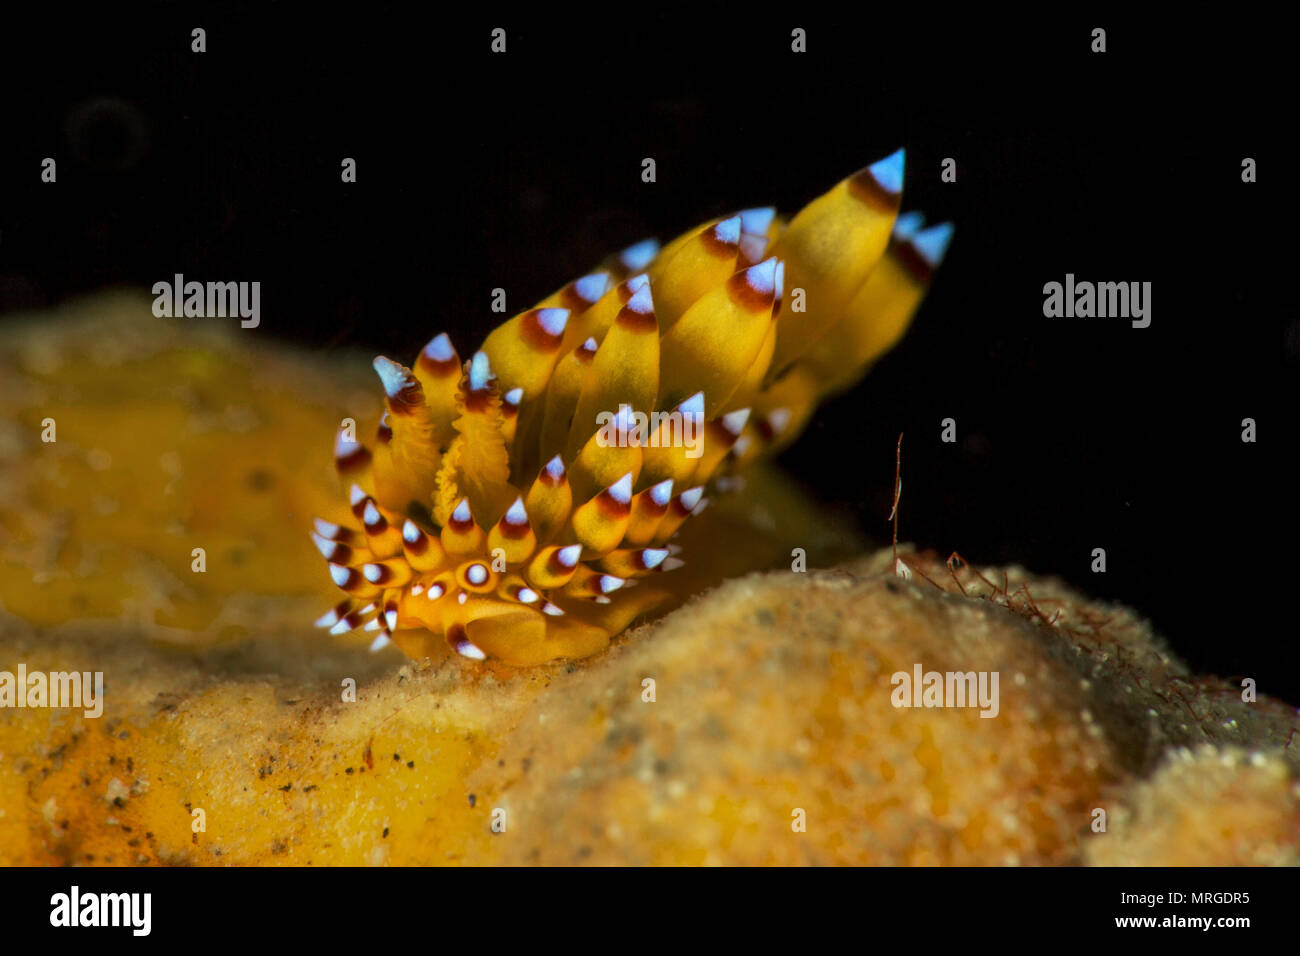 Sea slug Janolus sp. Picture was taken in Anilao, Philippines Stock Photo